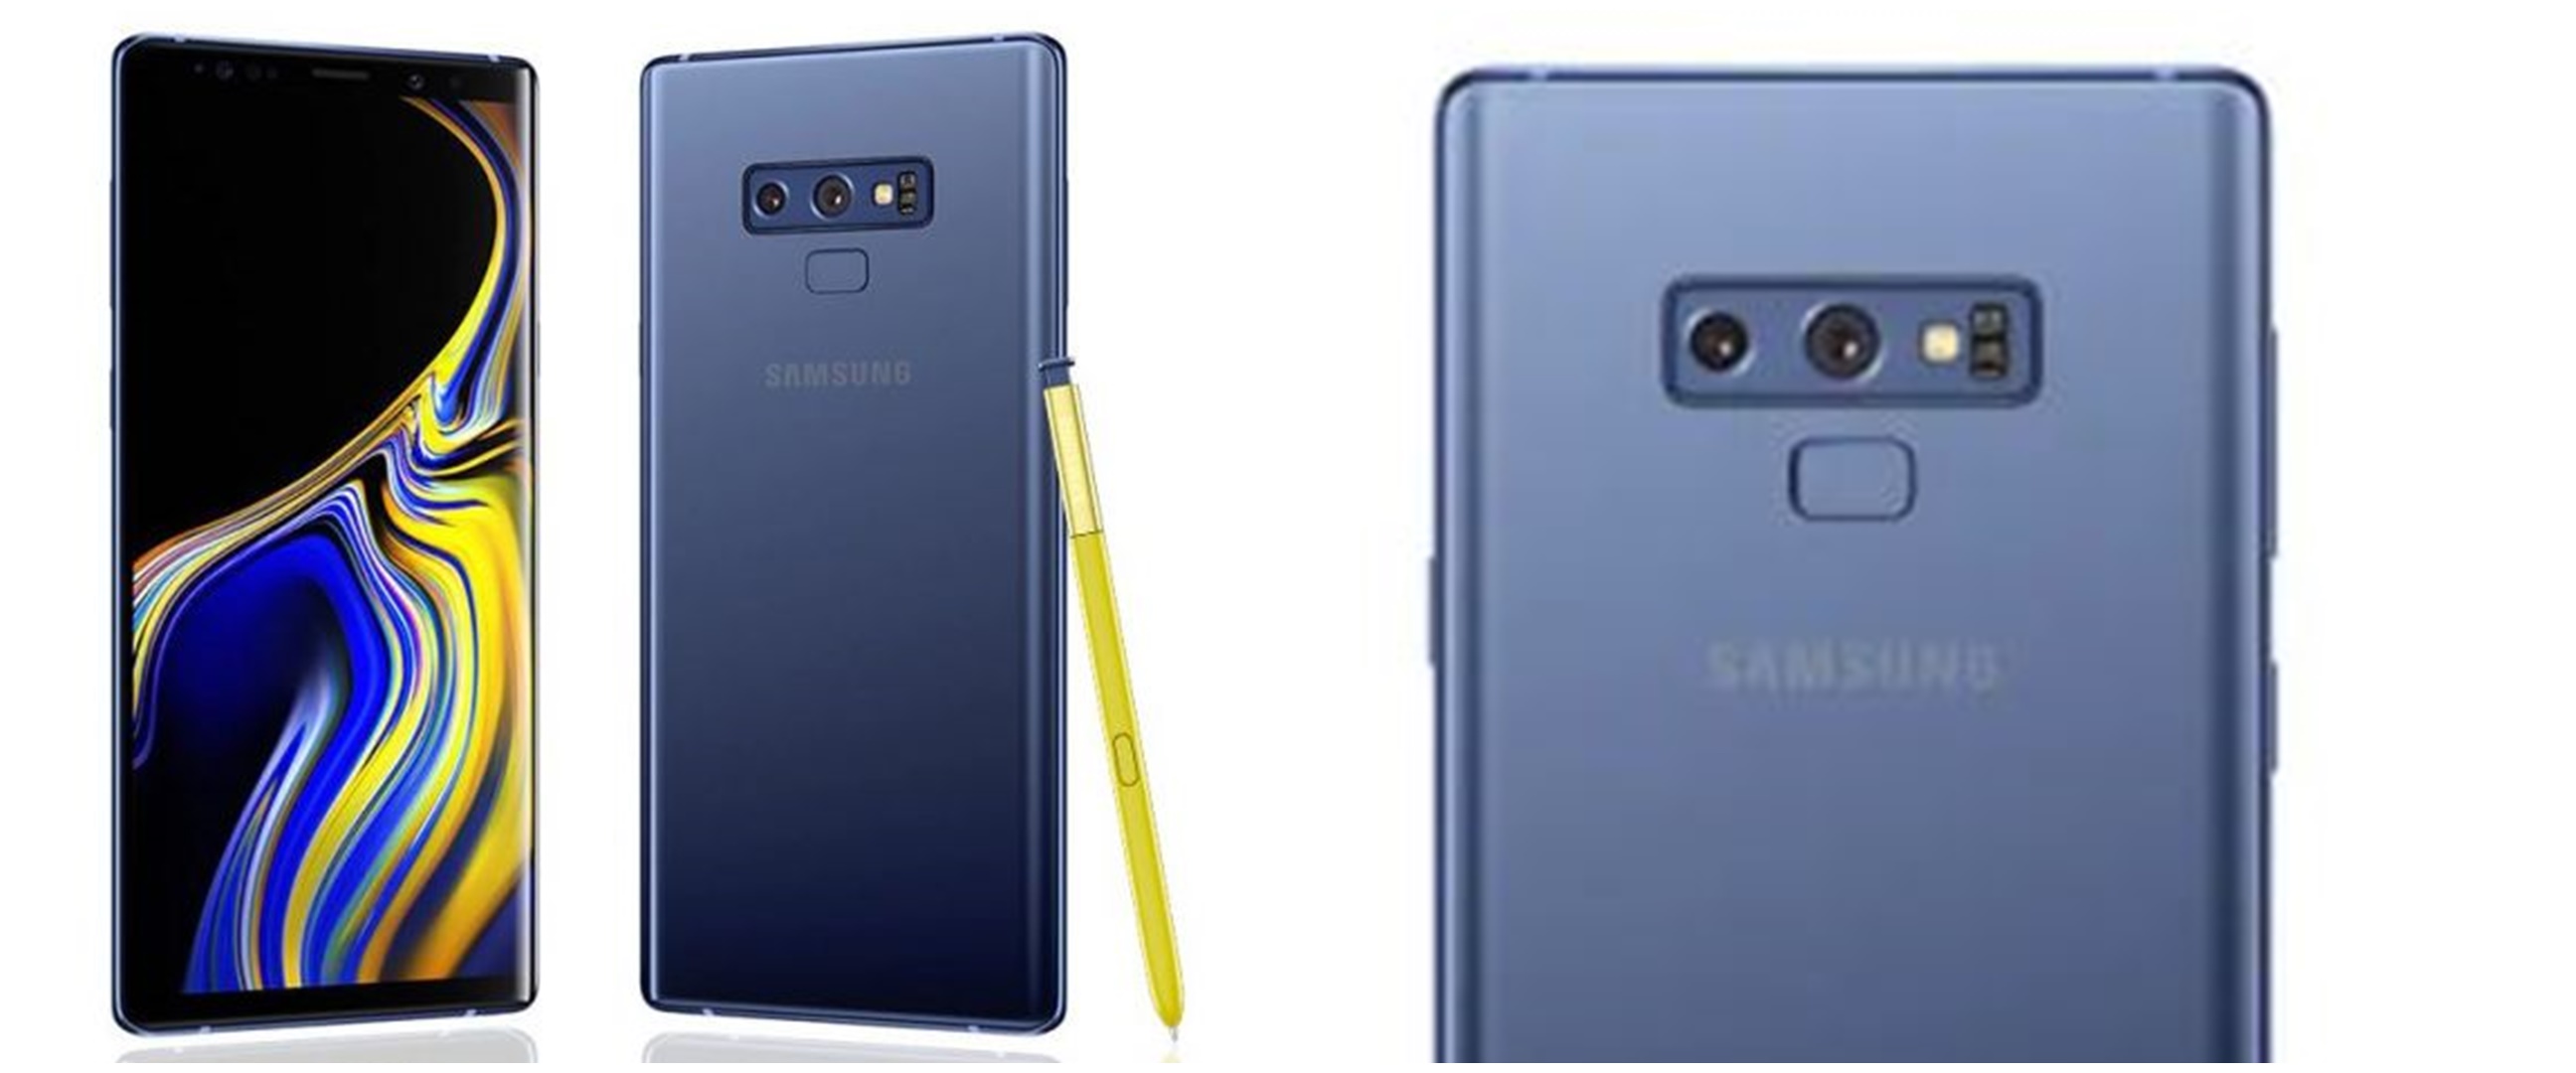 Samsung Galaxy Note 9 Harga Dan Spesifikasi Samsung Indonesia